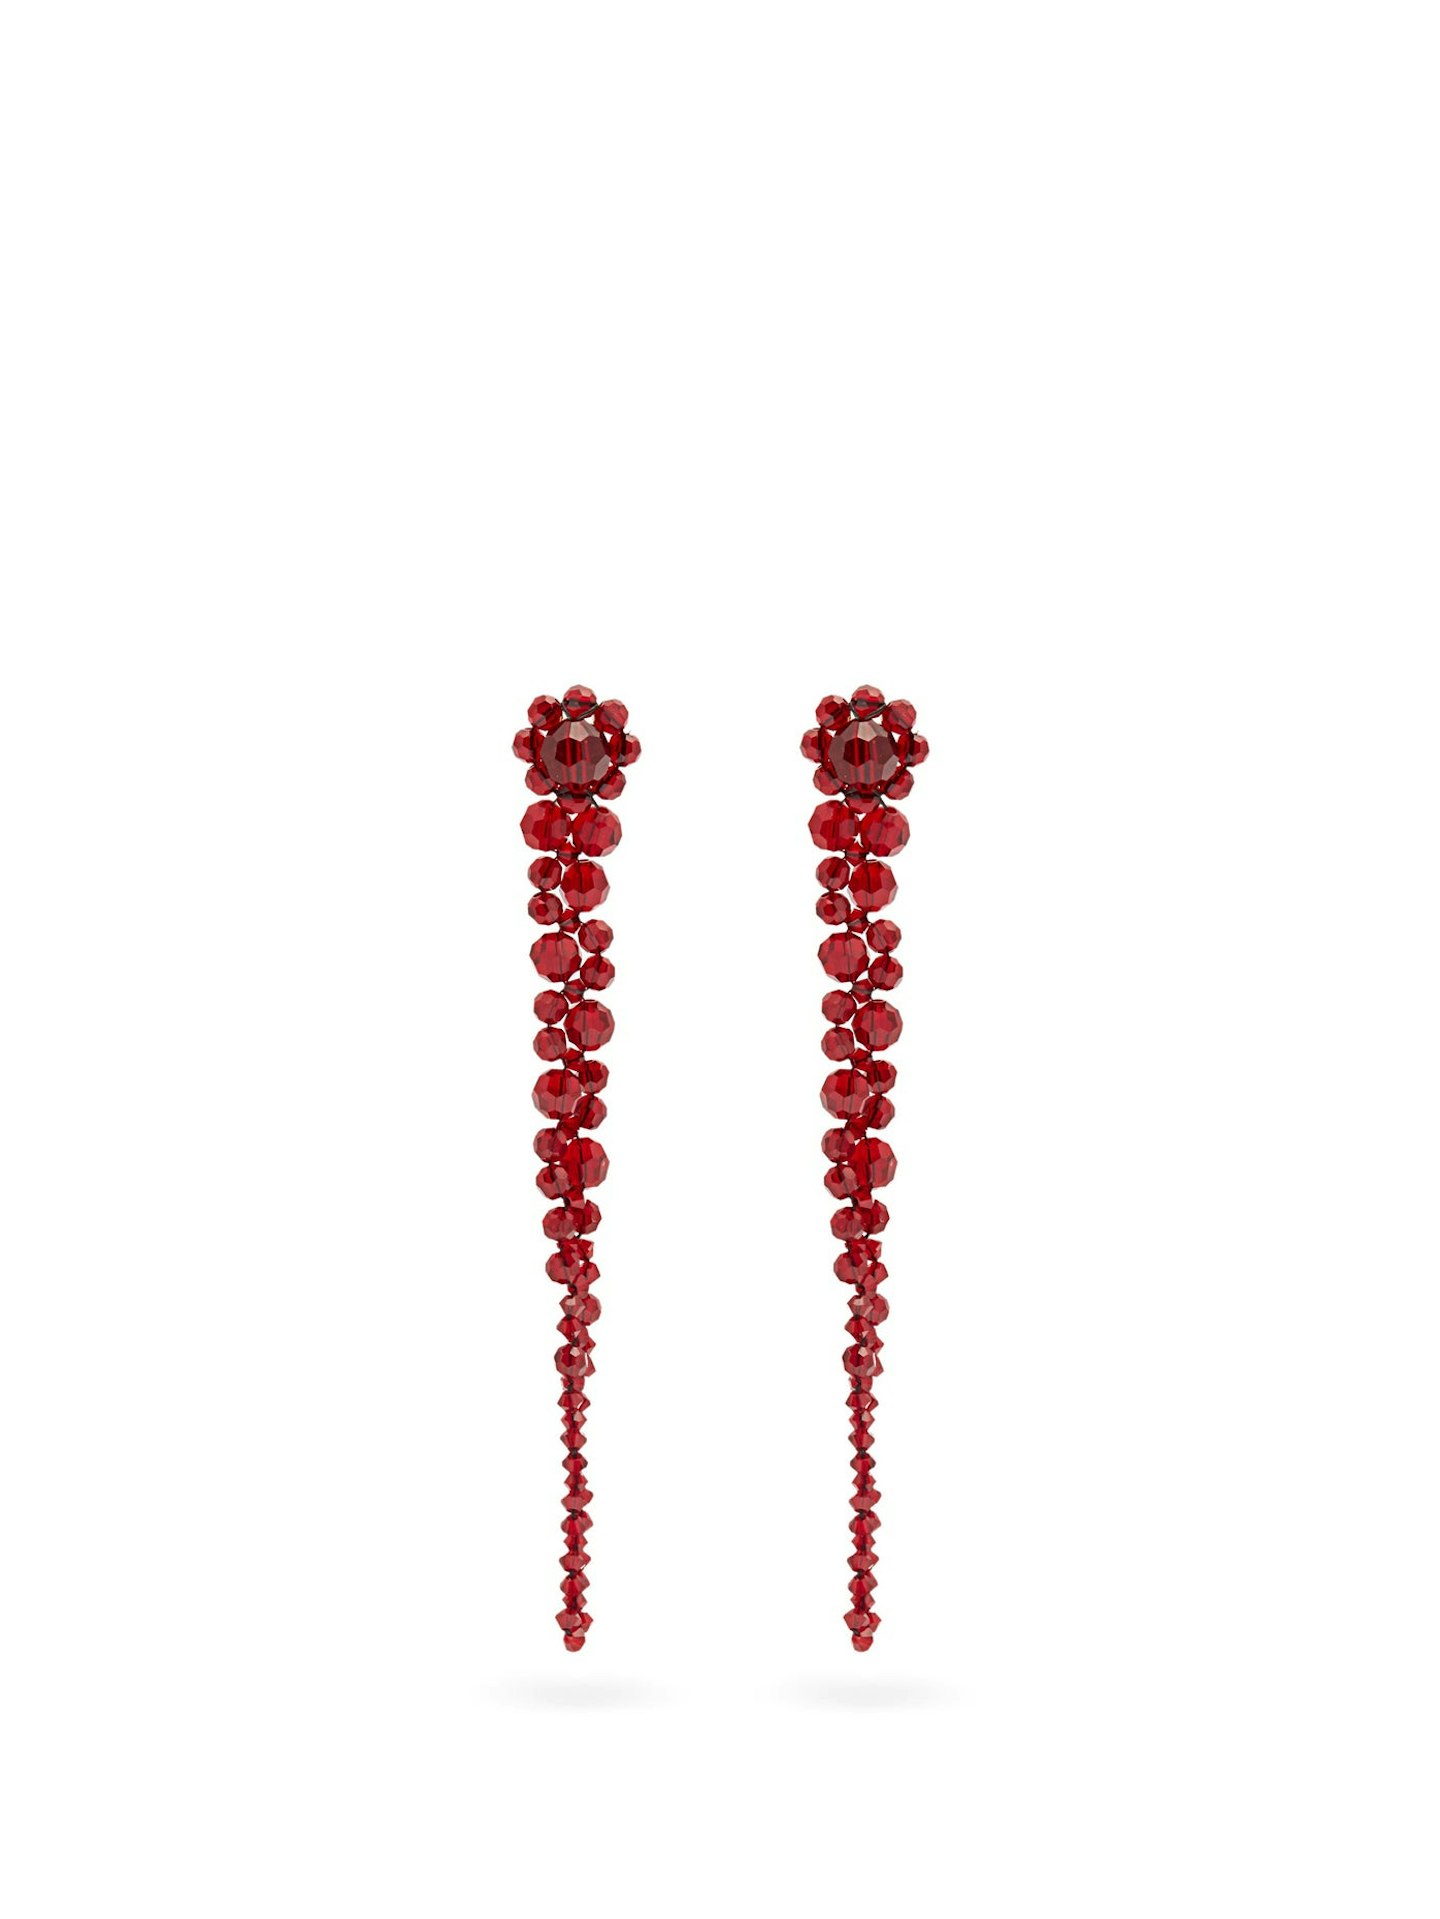 Simone Rocha, Drip Crystal-Embellished Earrings, £195